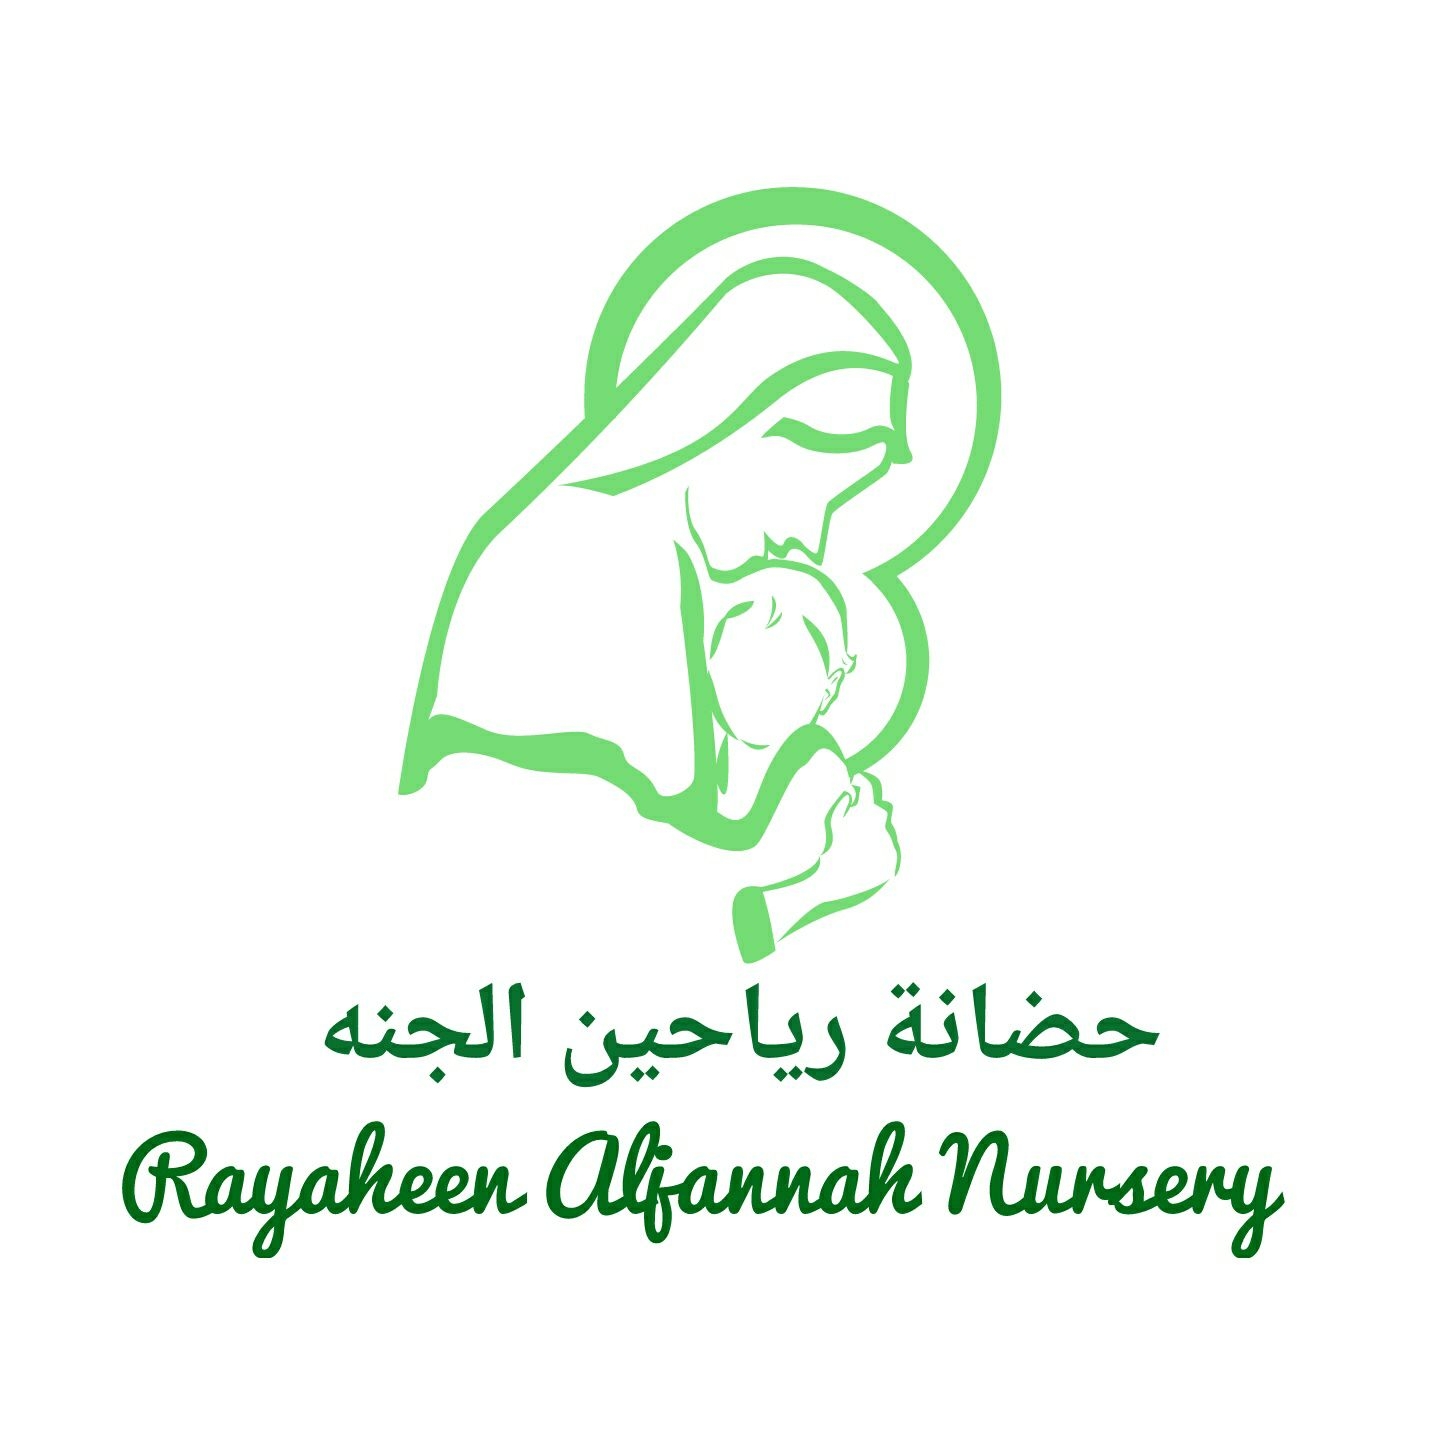 Nursery logo Rayaheen aljannah nursery